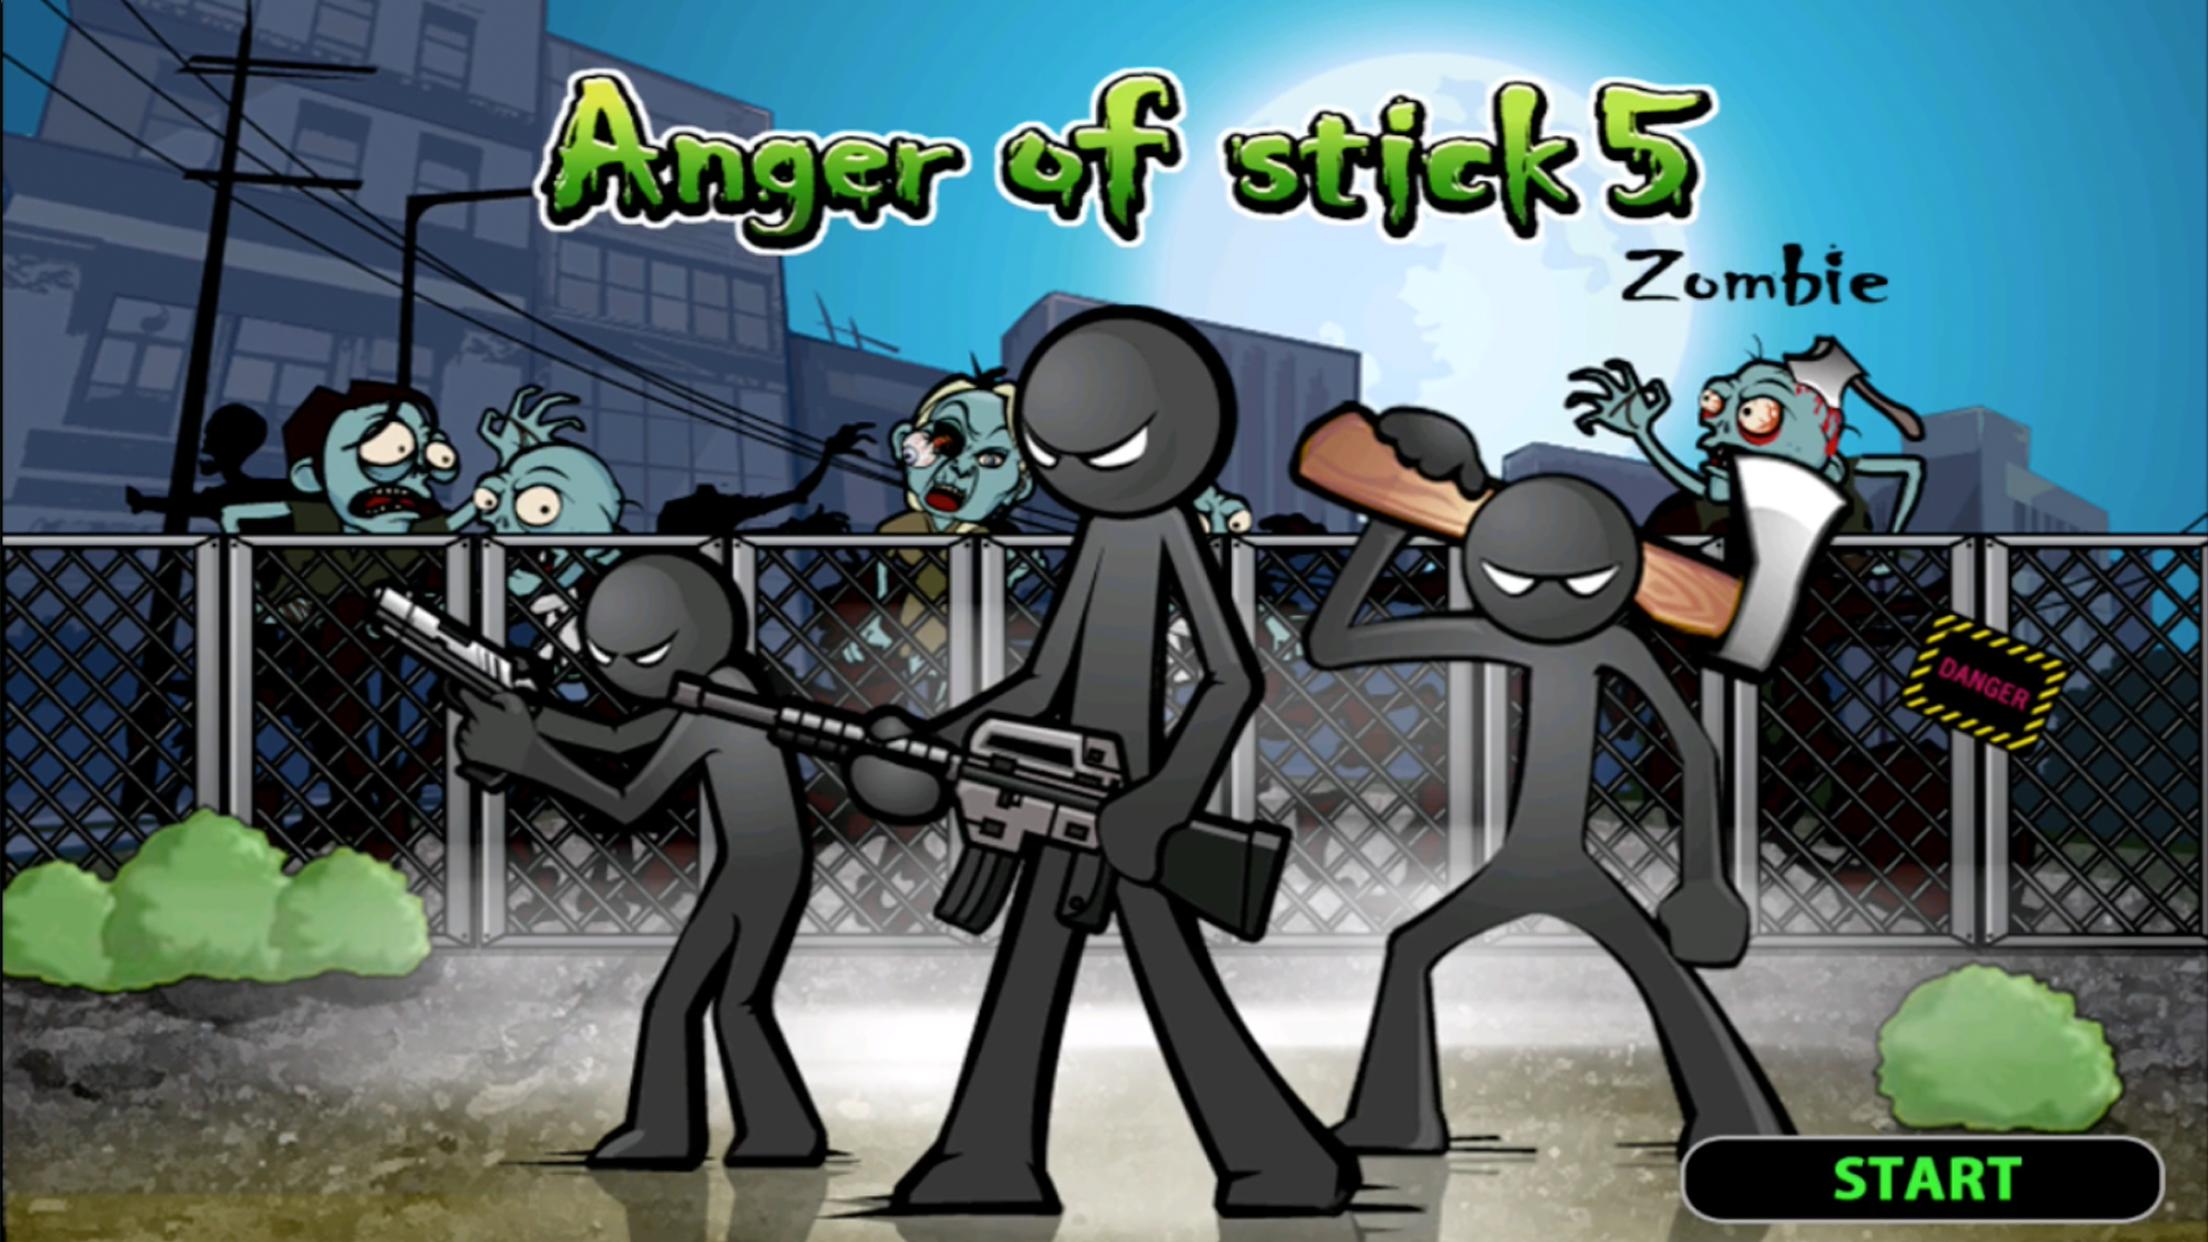 Игра Ангер оф стик 5. Ангер оф стик 5 зомби. Игра Anger of Stick 5 Zombie. Черные человечки игра. Ну против зомби